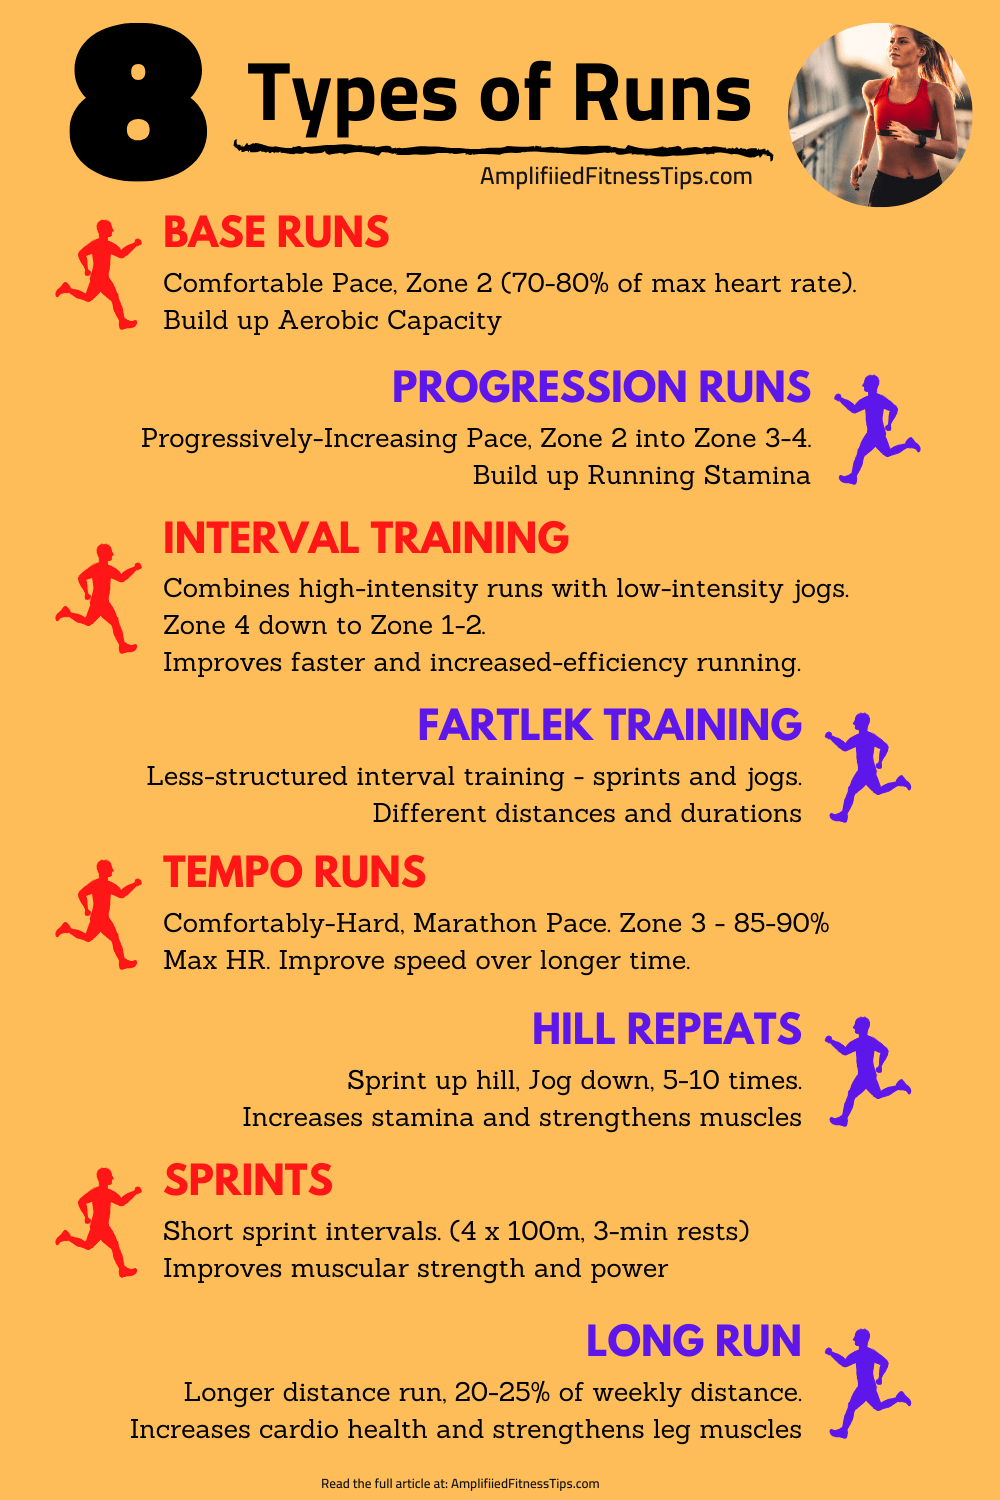 TYPES OF RUNNING